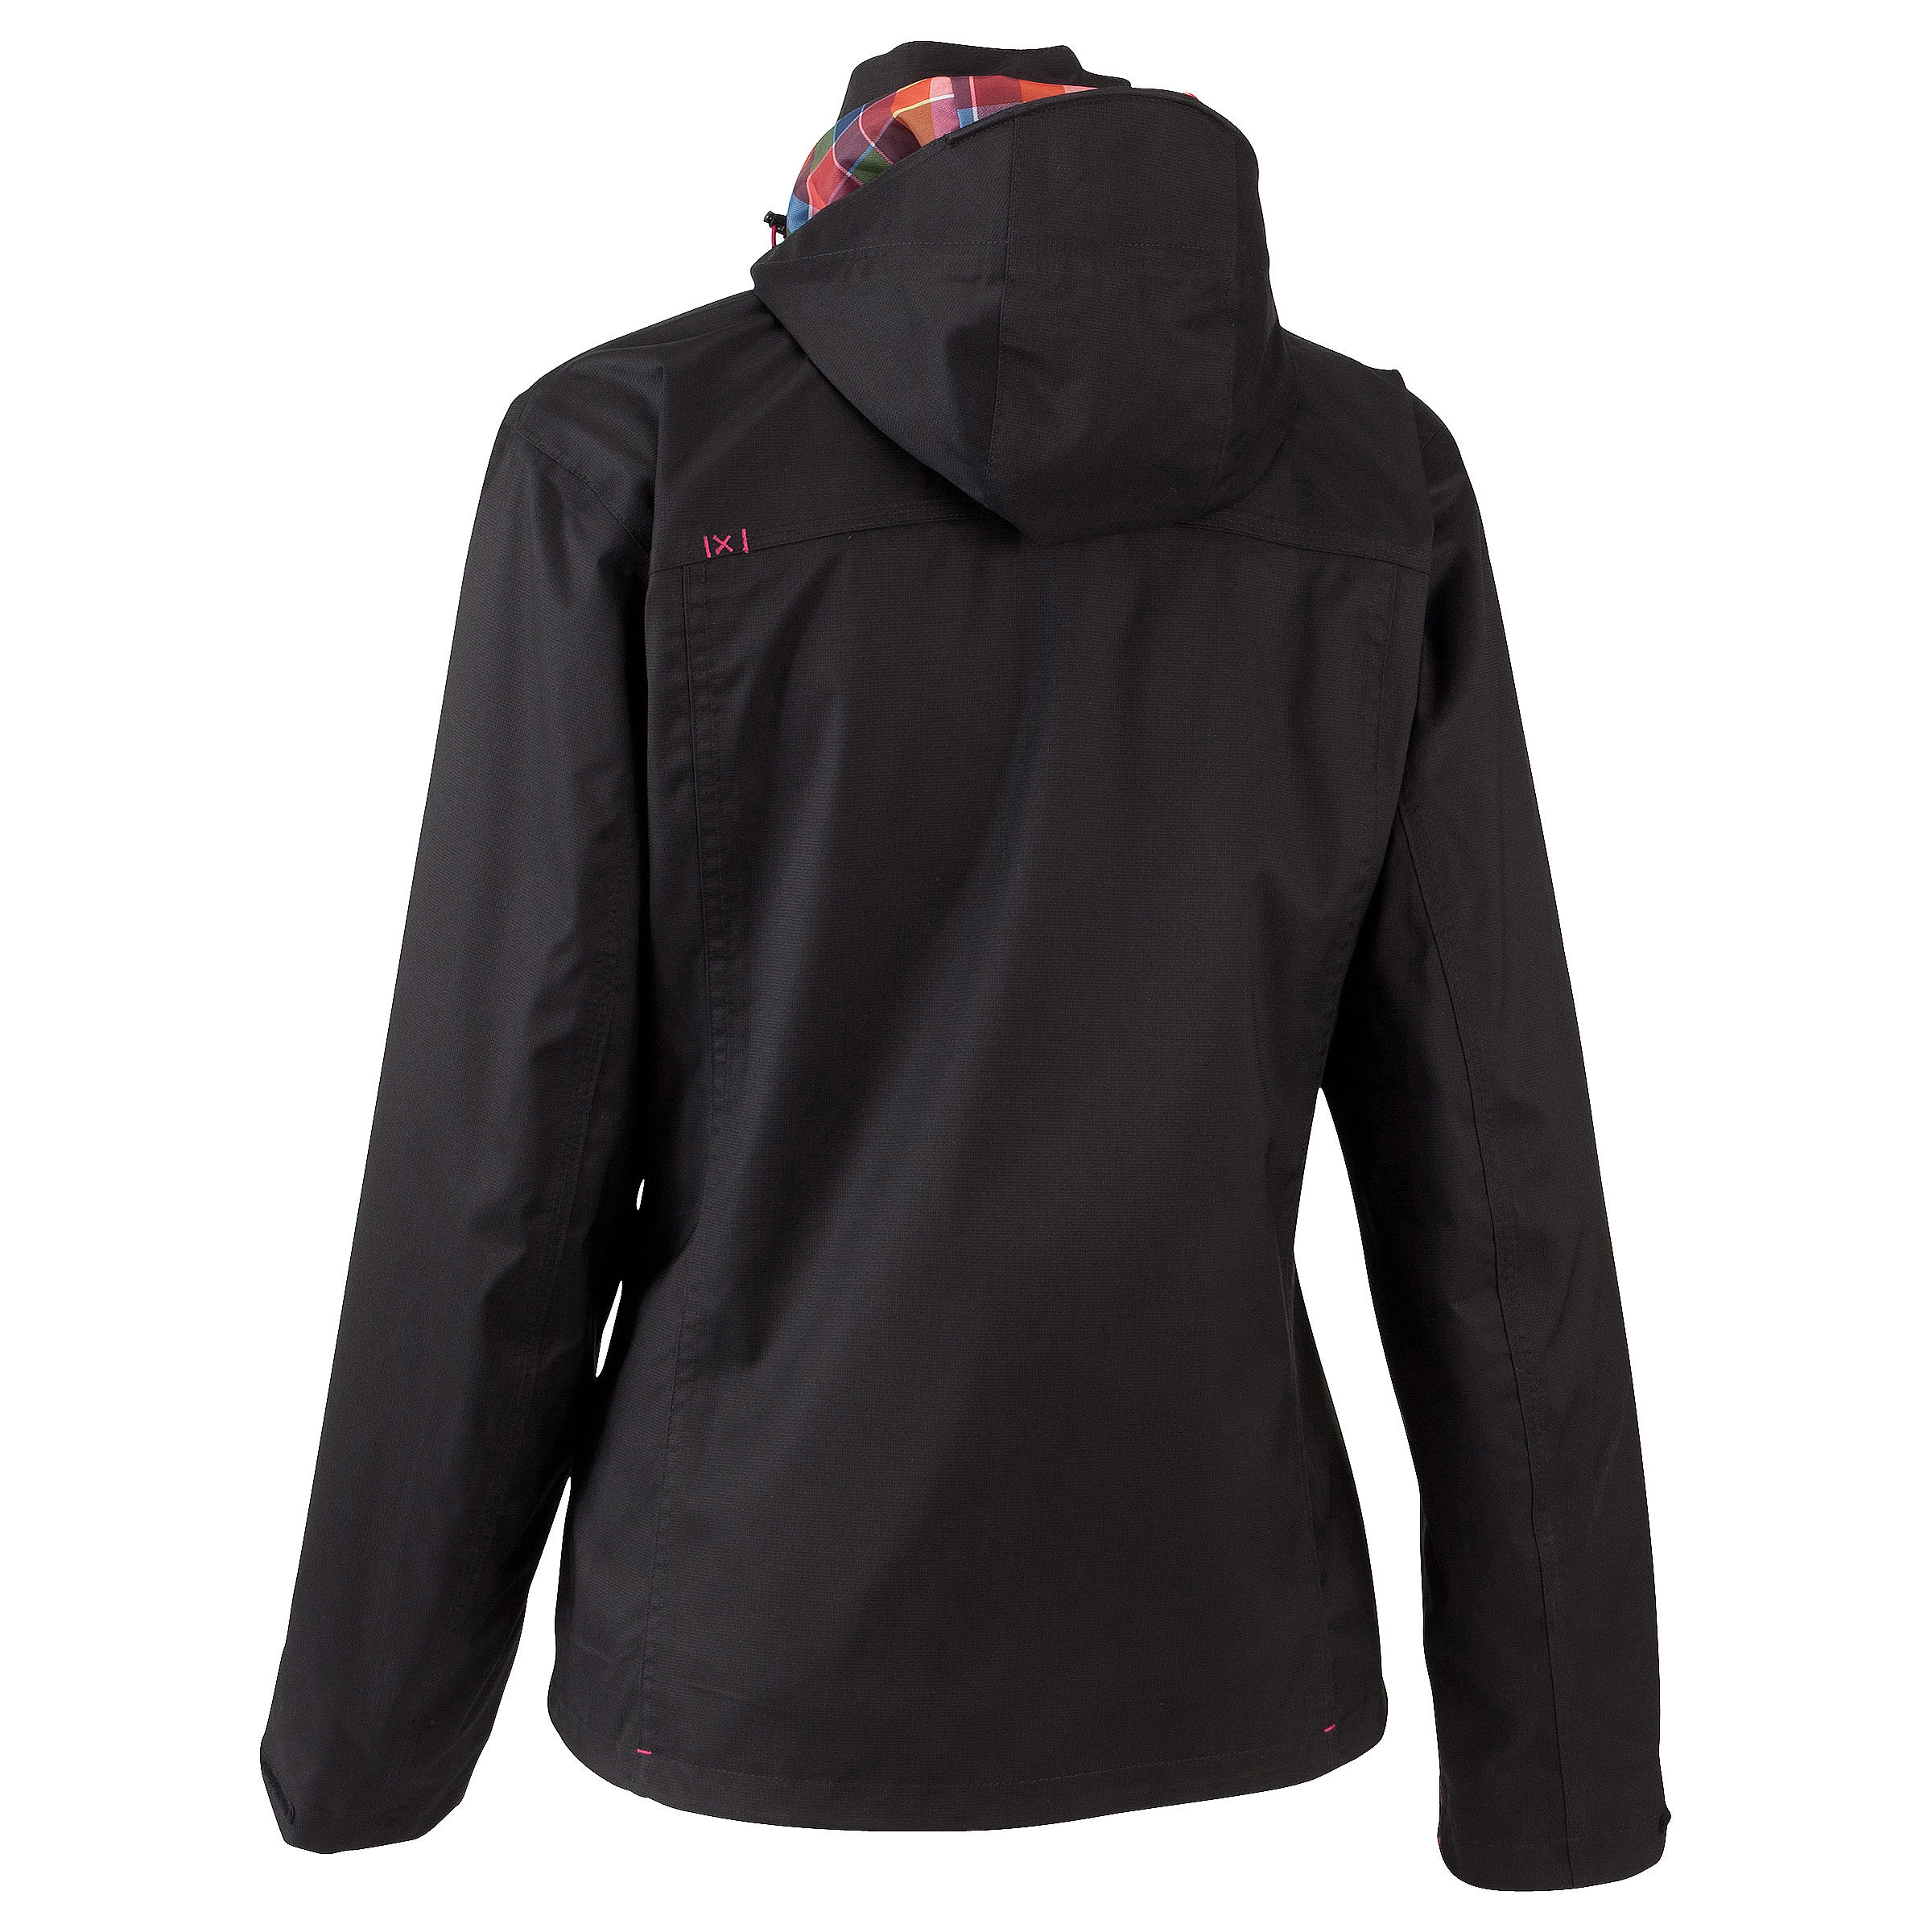 Rainwarm 100 Women's 3-in-1 Trekking Jacket - Black 8/26